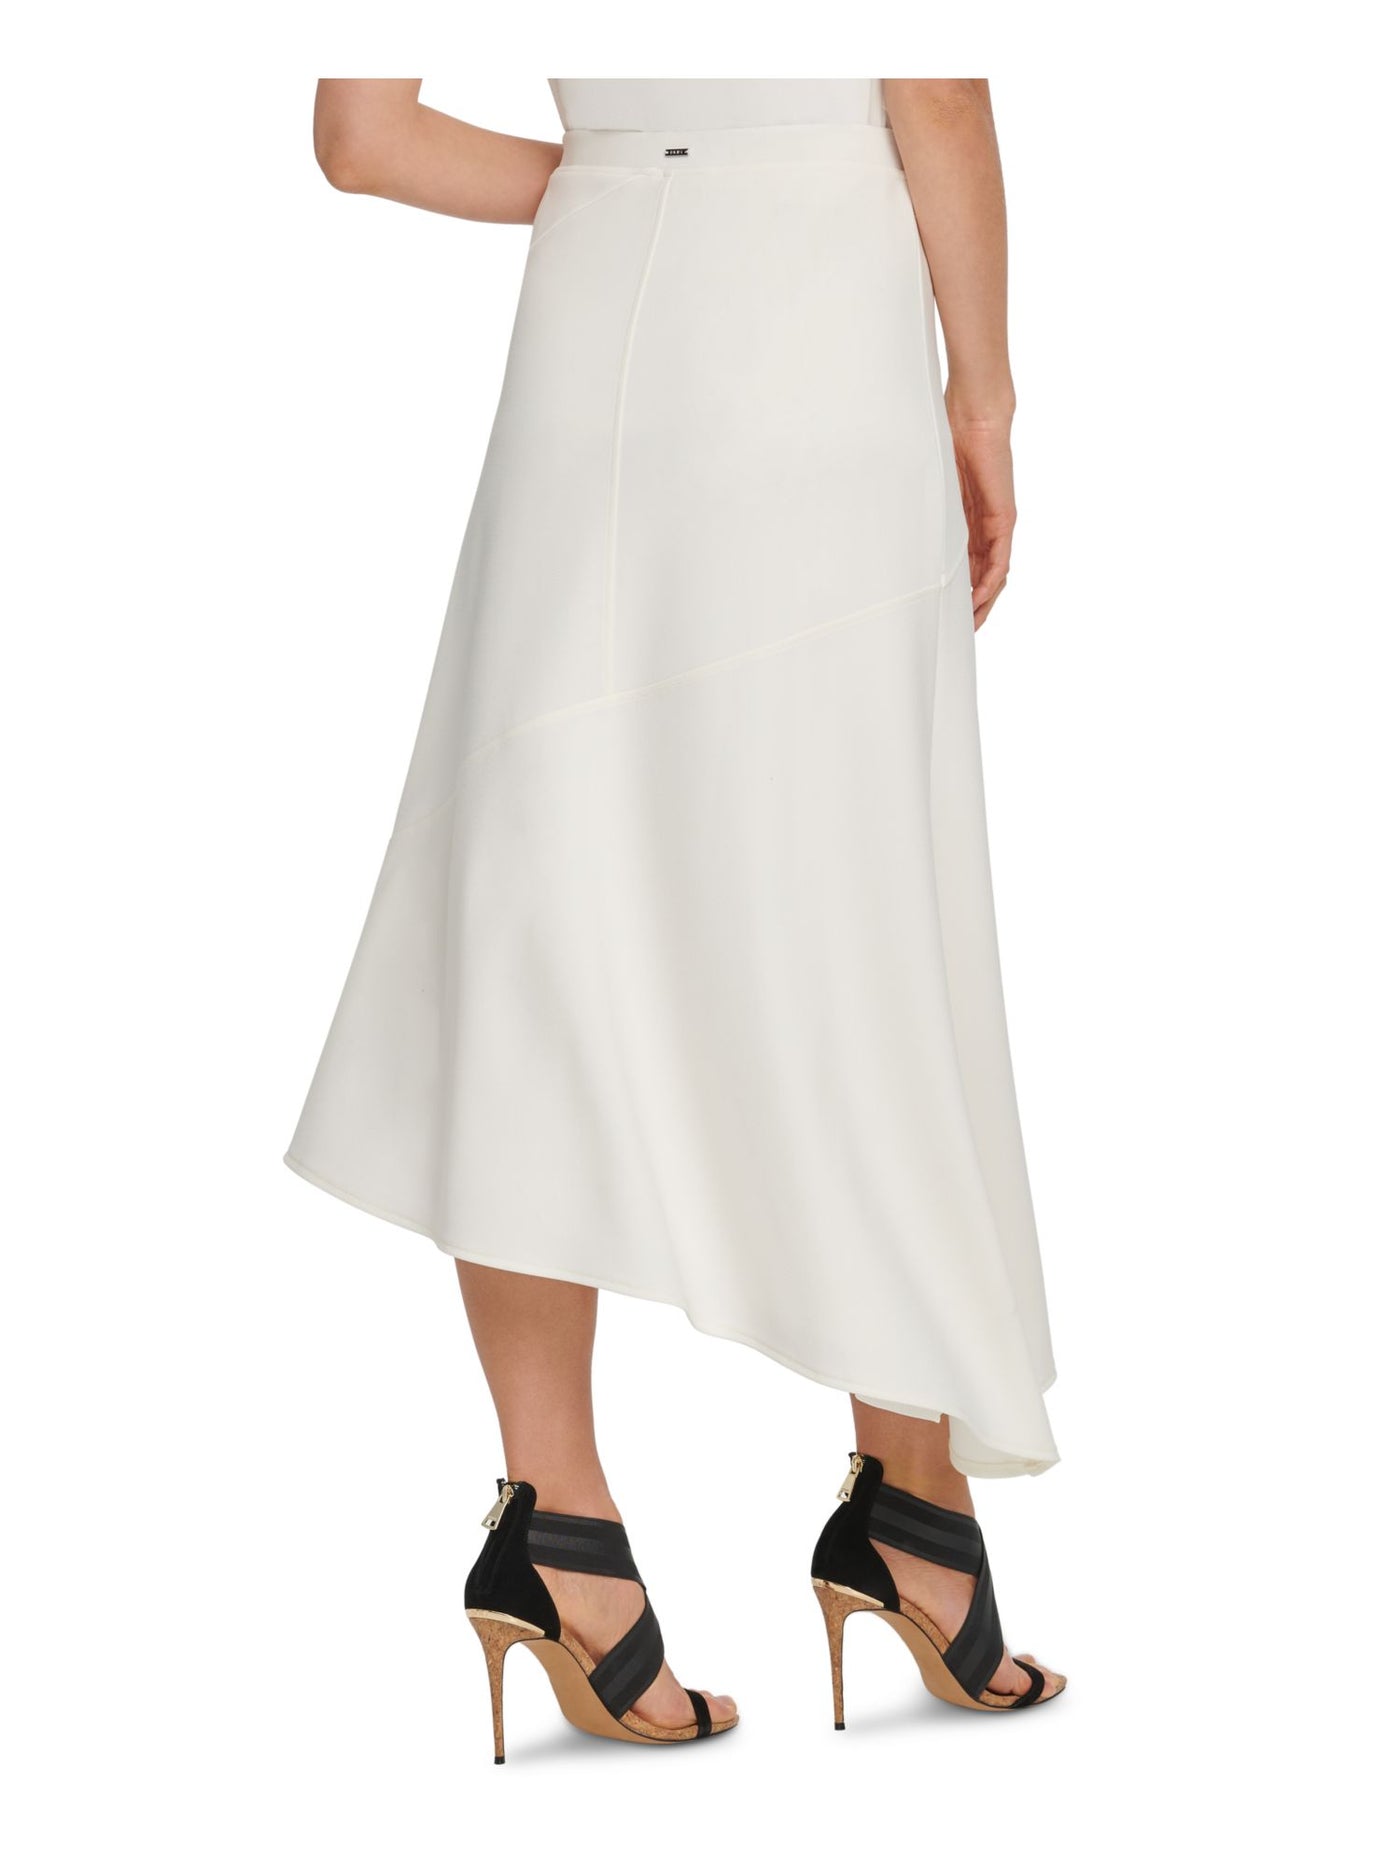 DKNY Womens Ivory Tea-Length Shift Skirt XL